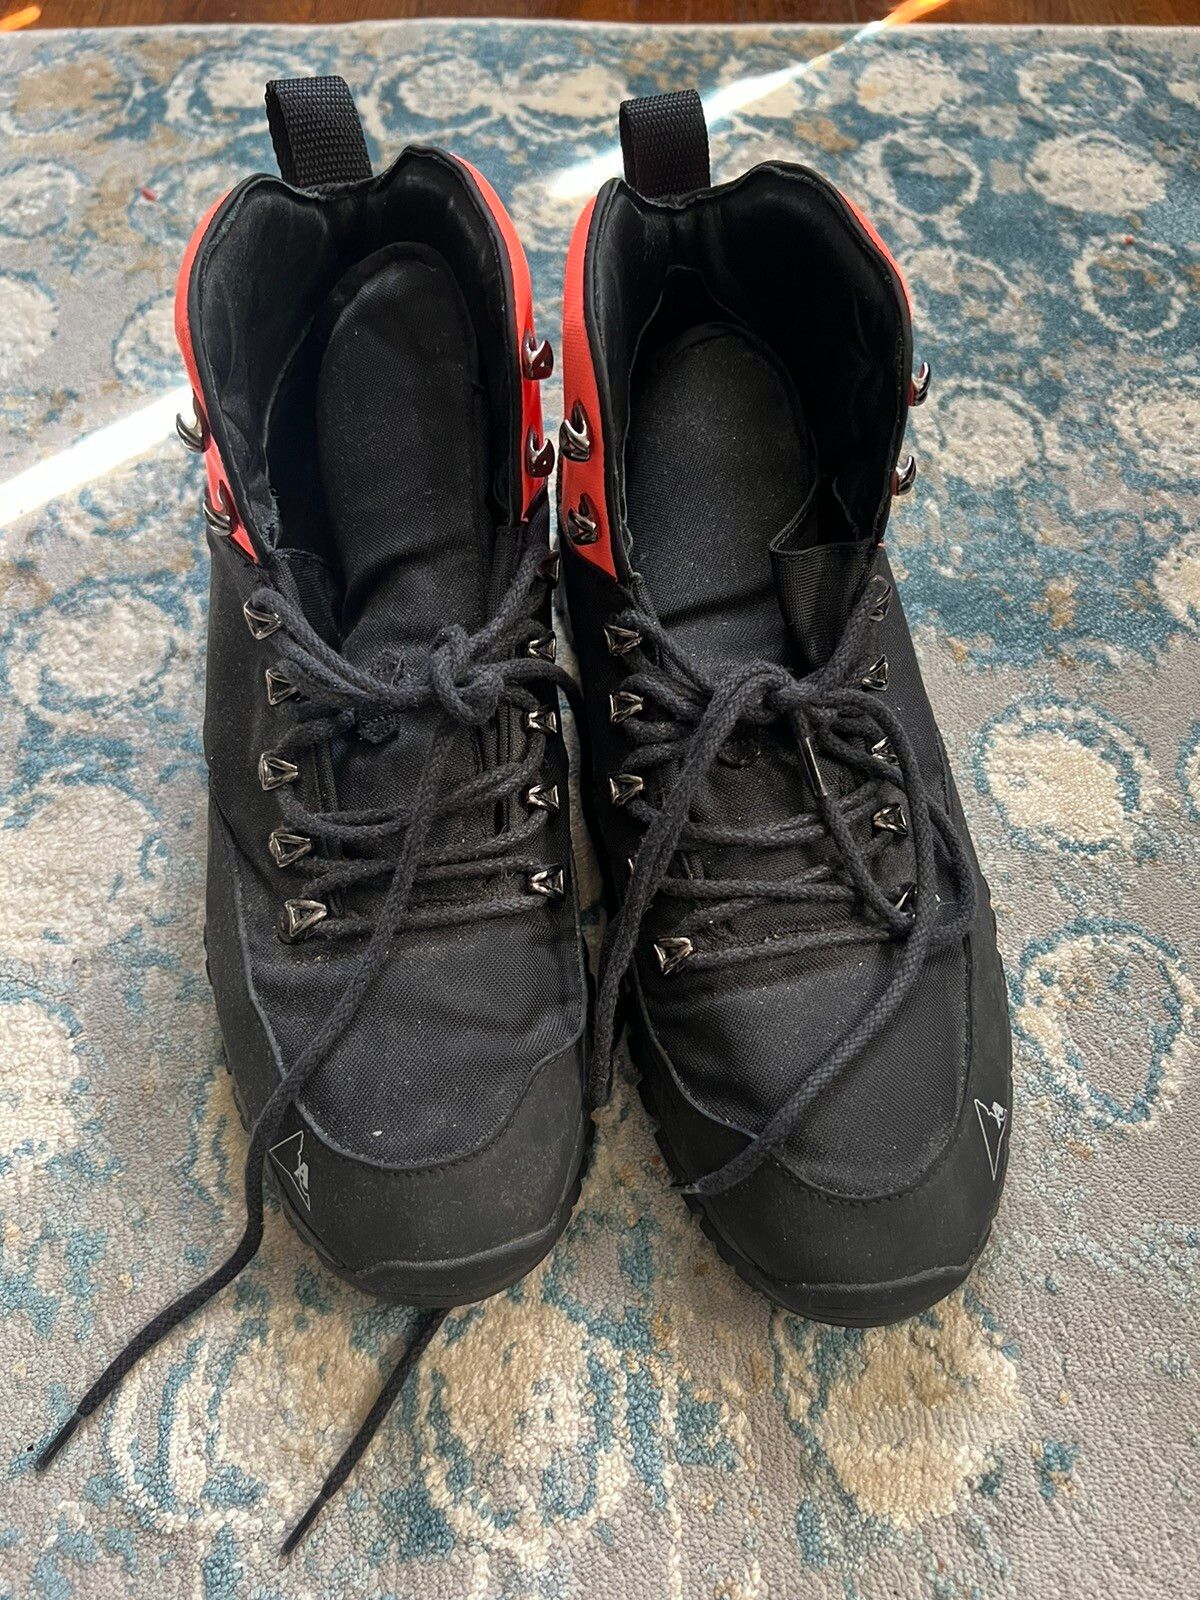 Avant Garde Alyx ROA Hiking boots | Grailed